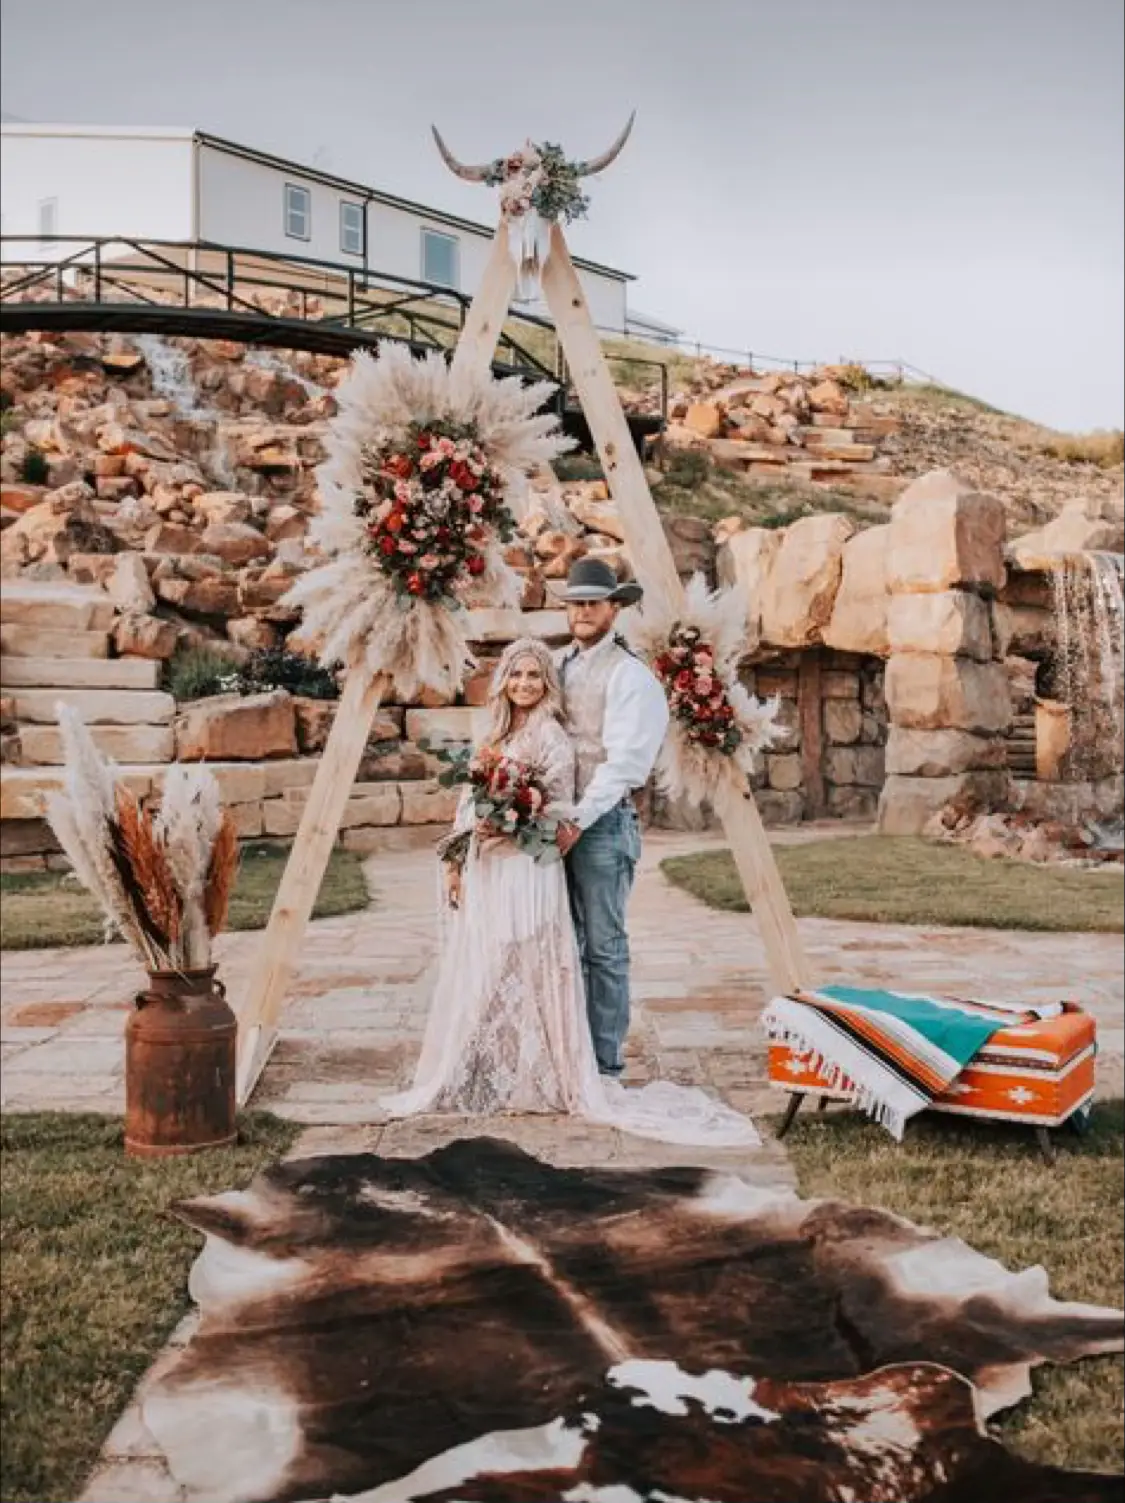 2019 wedding colors trend - canyon rose bridesmaid dresses #wedding  #weddinginspiration #bridesmaid…